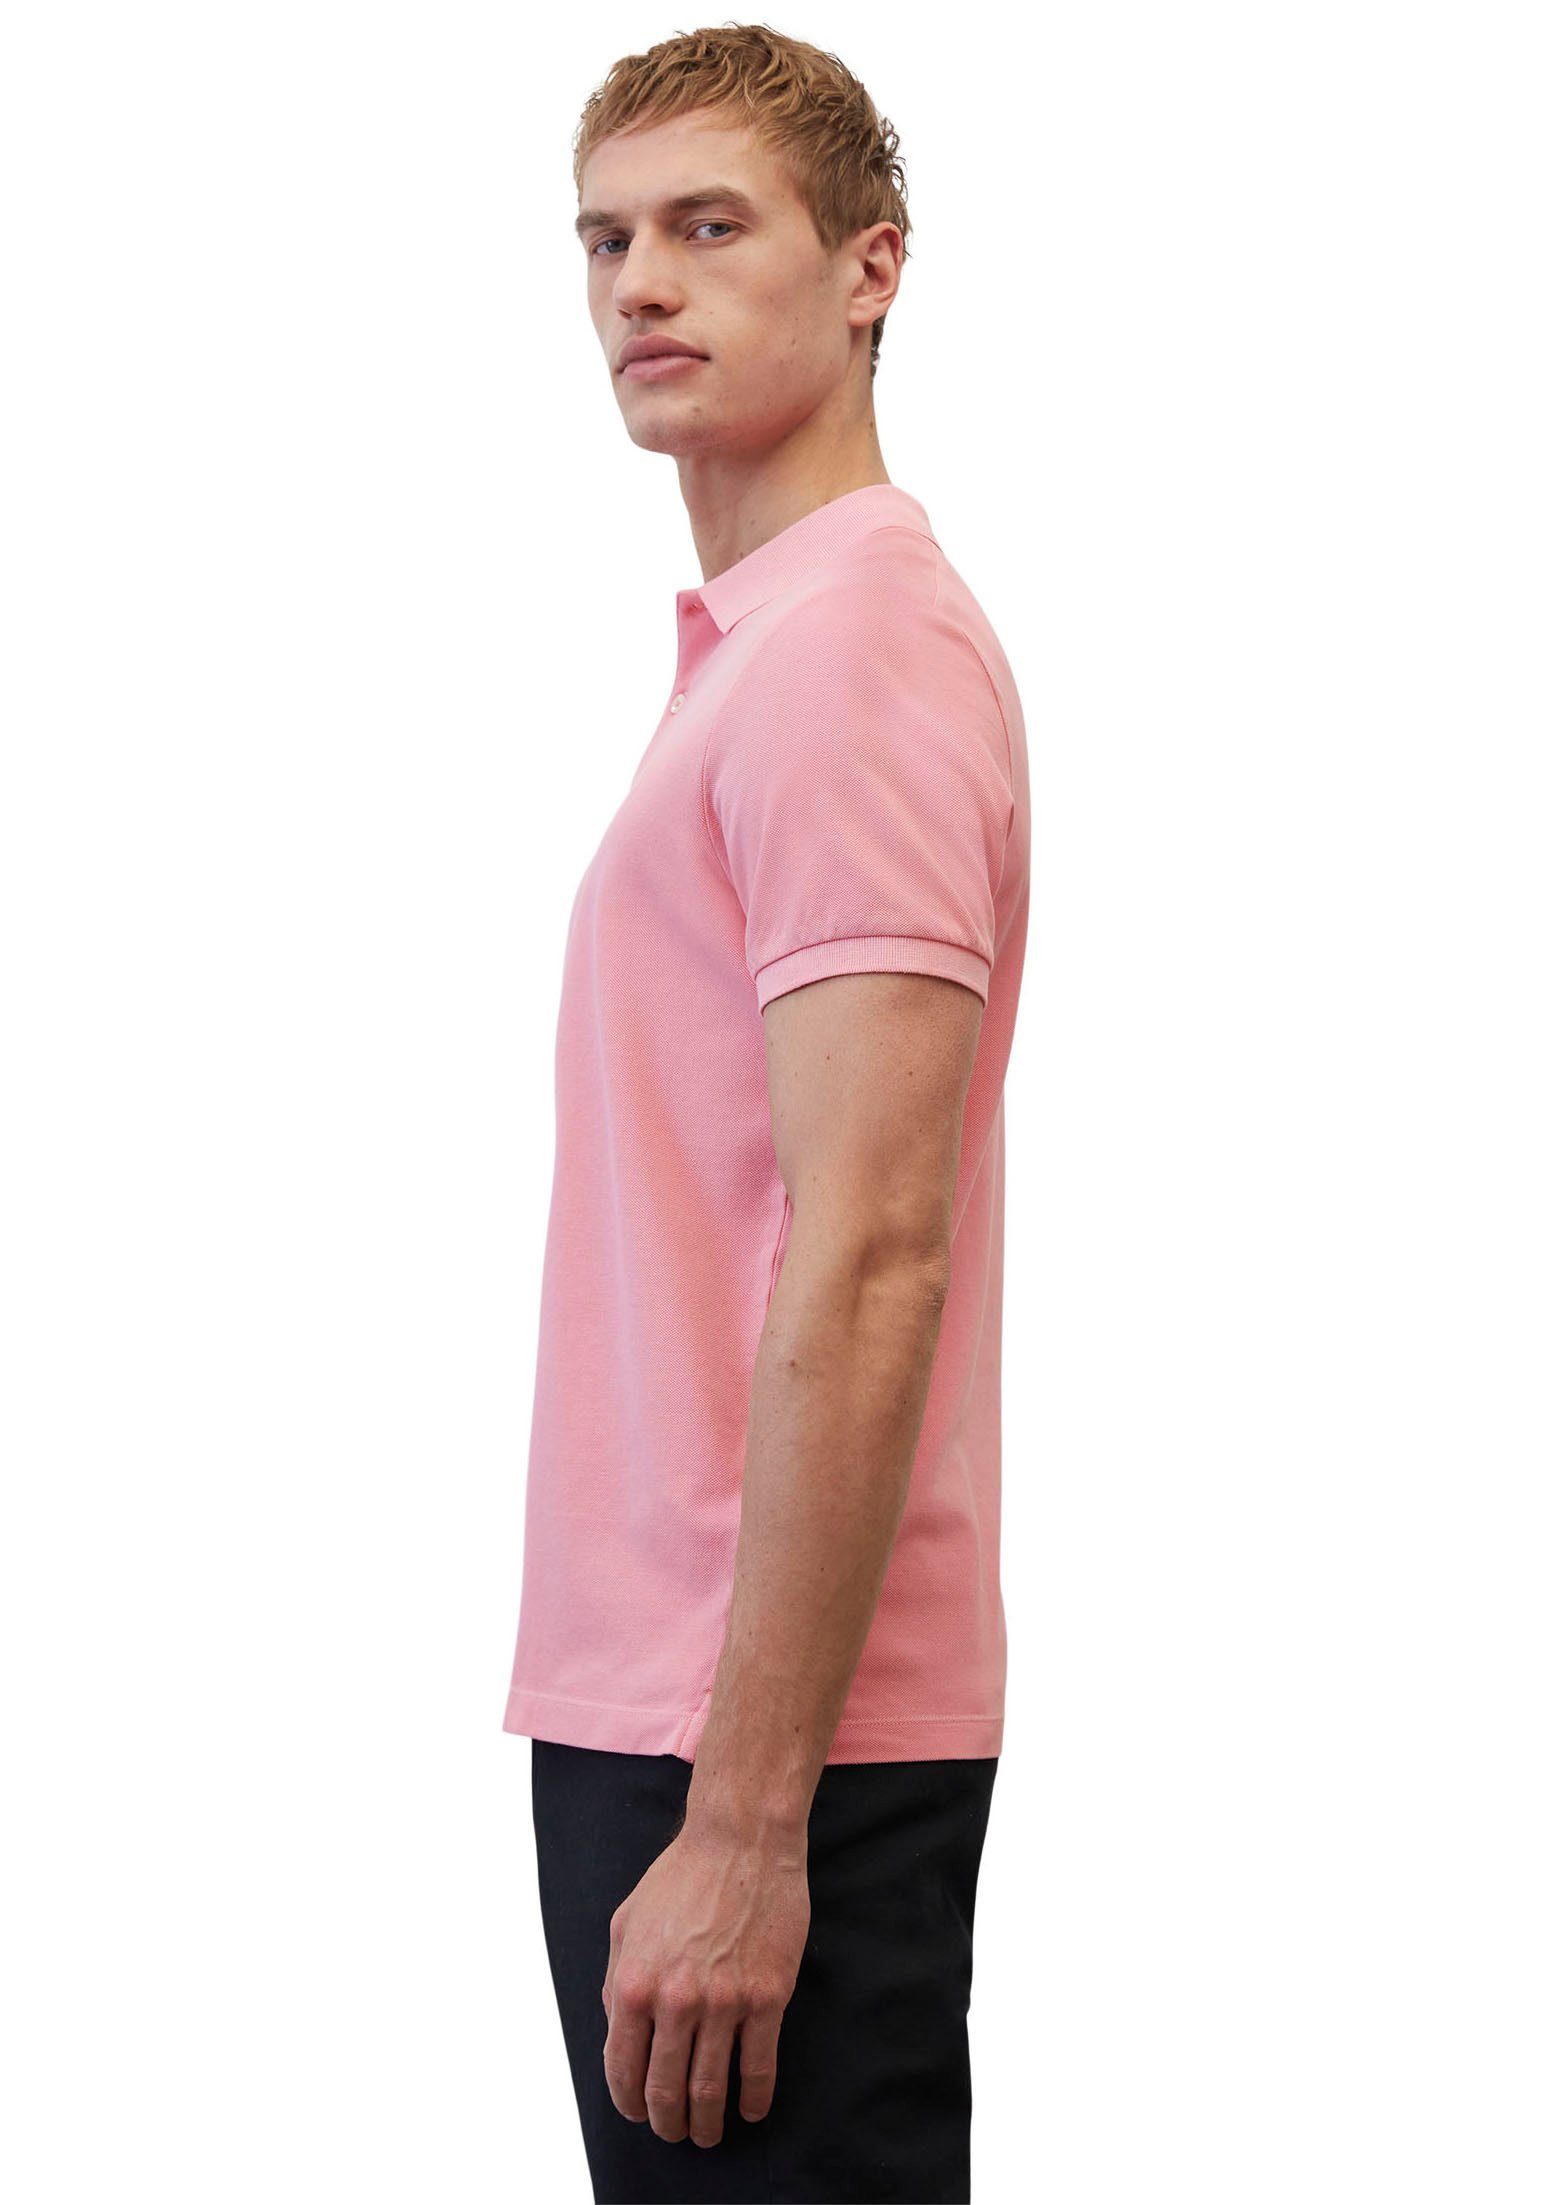 Marc O'Polo Poloshirt im pink Look klassischen